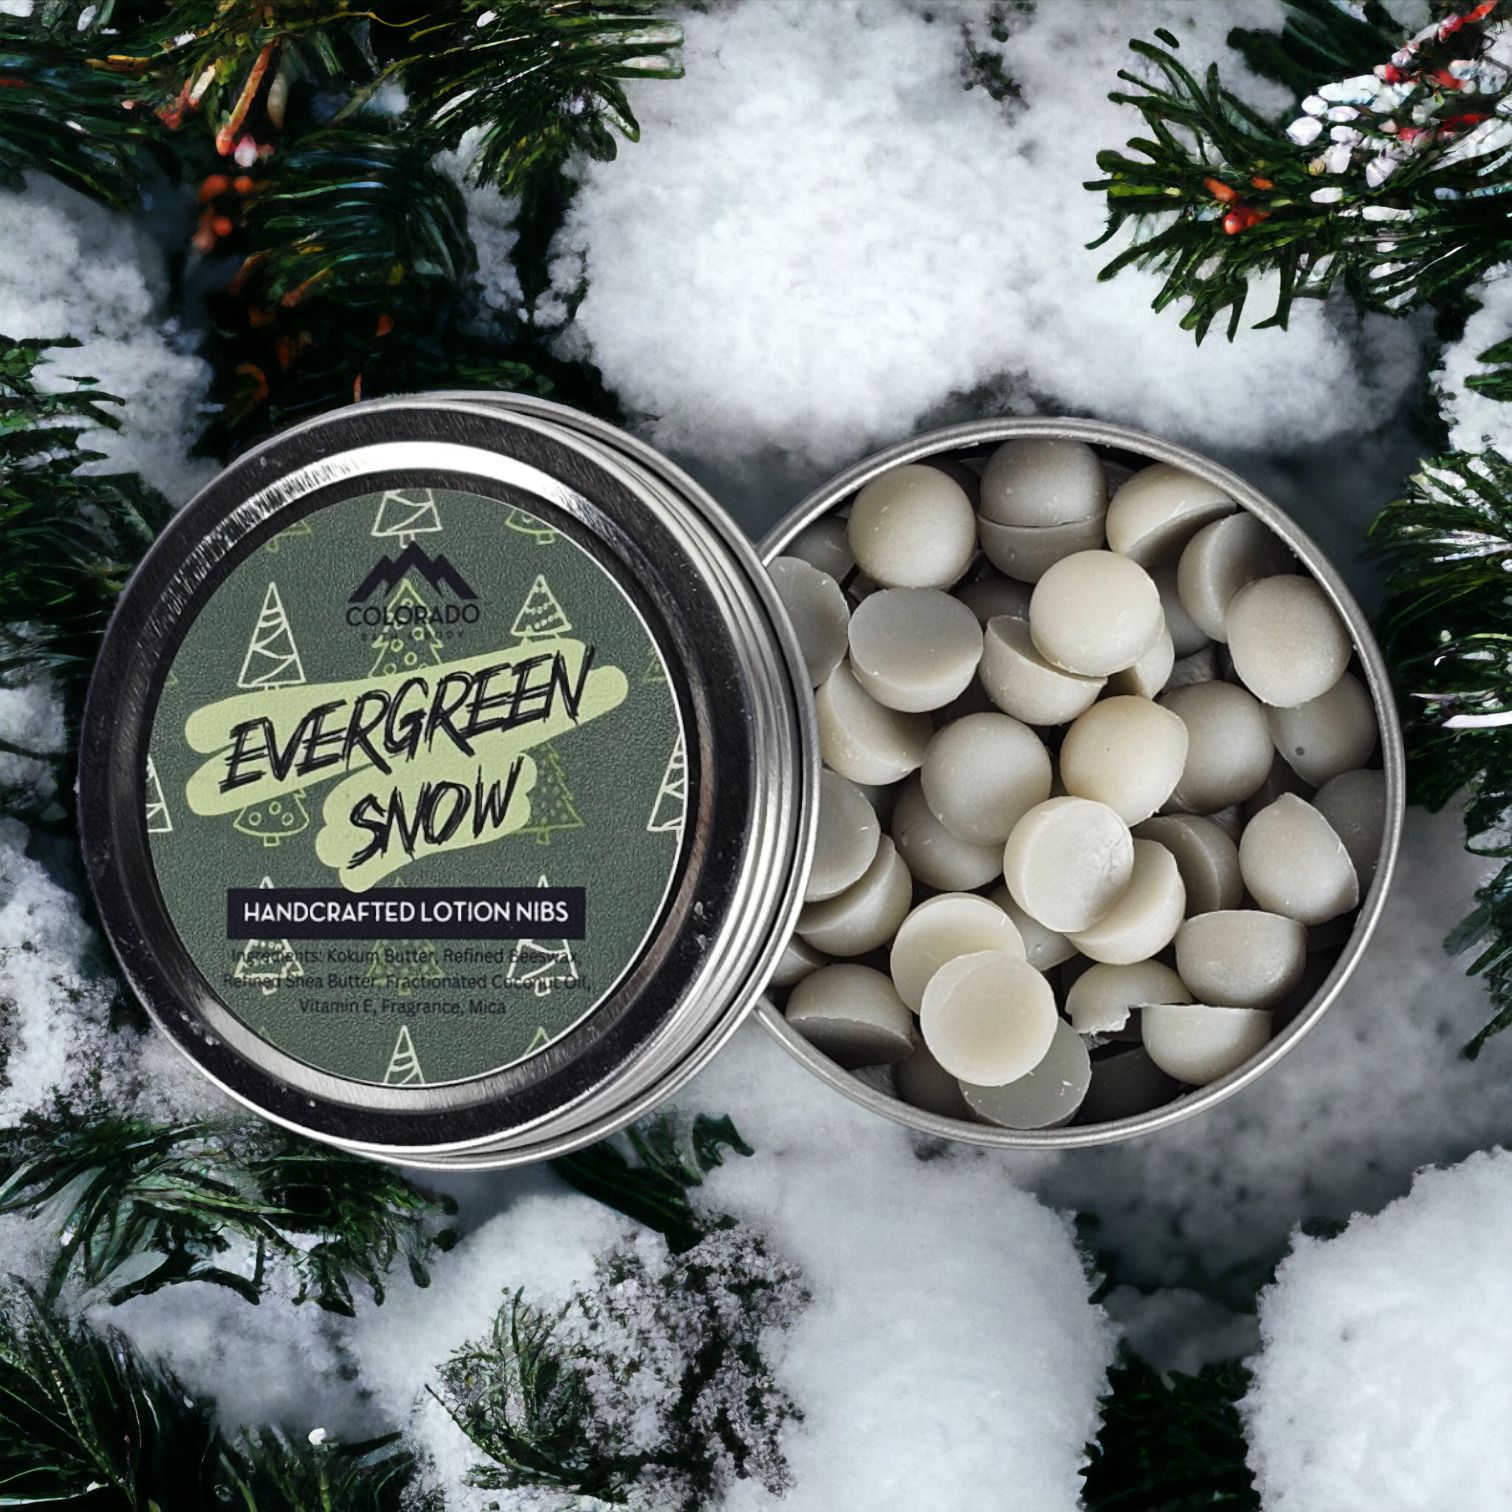 Evergreen Snow Lotion Nibs